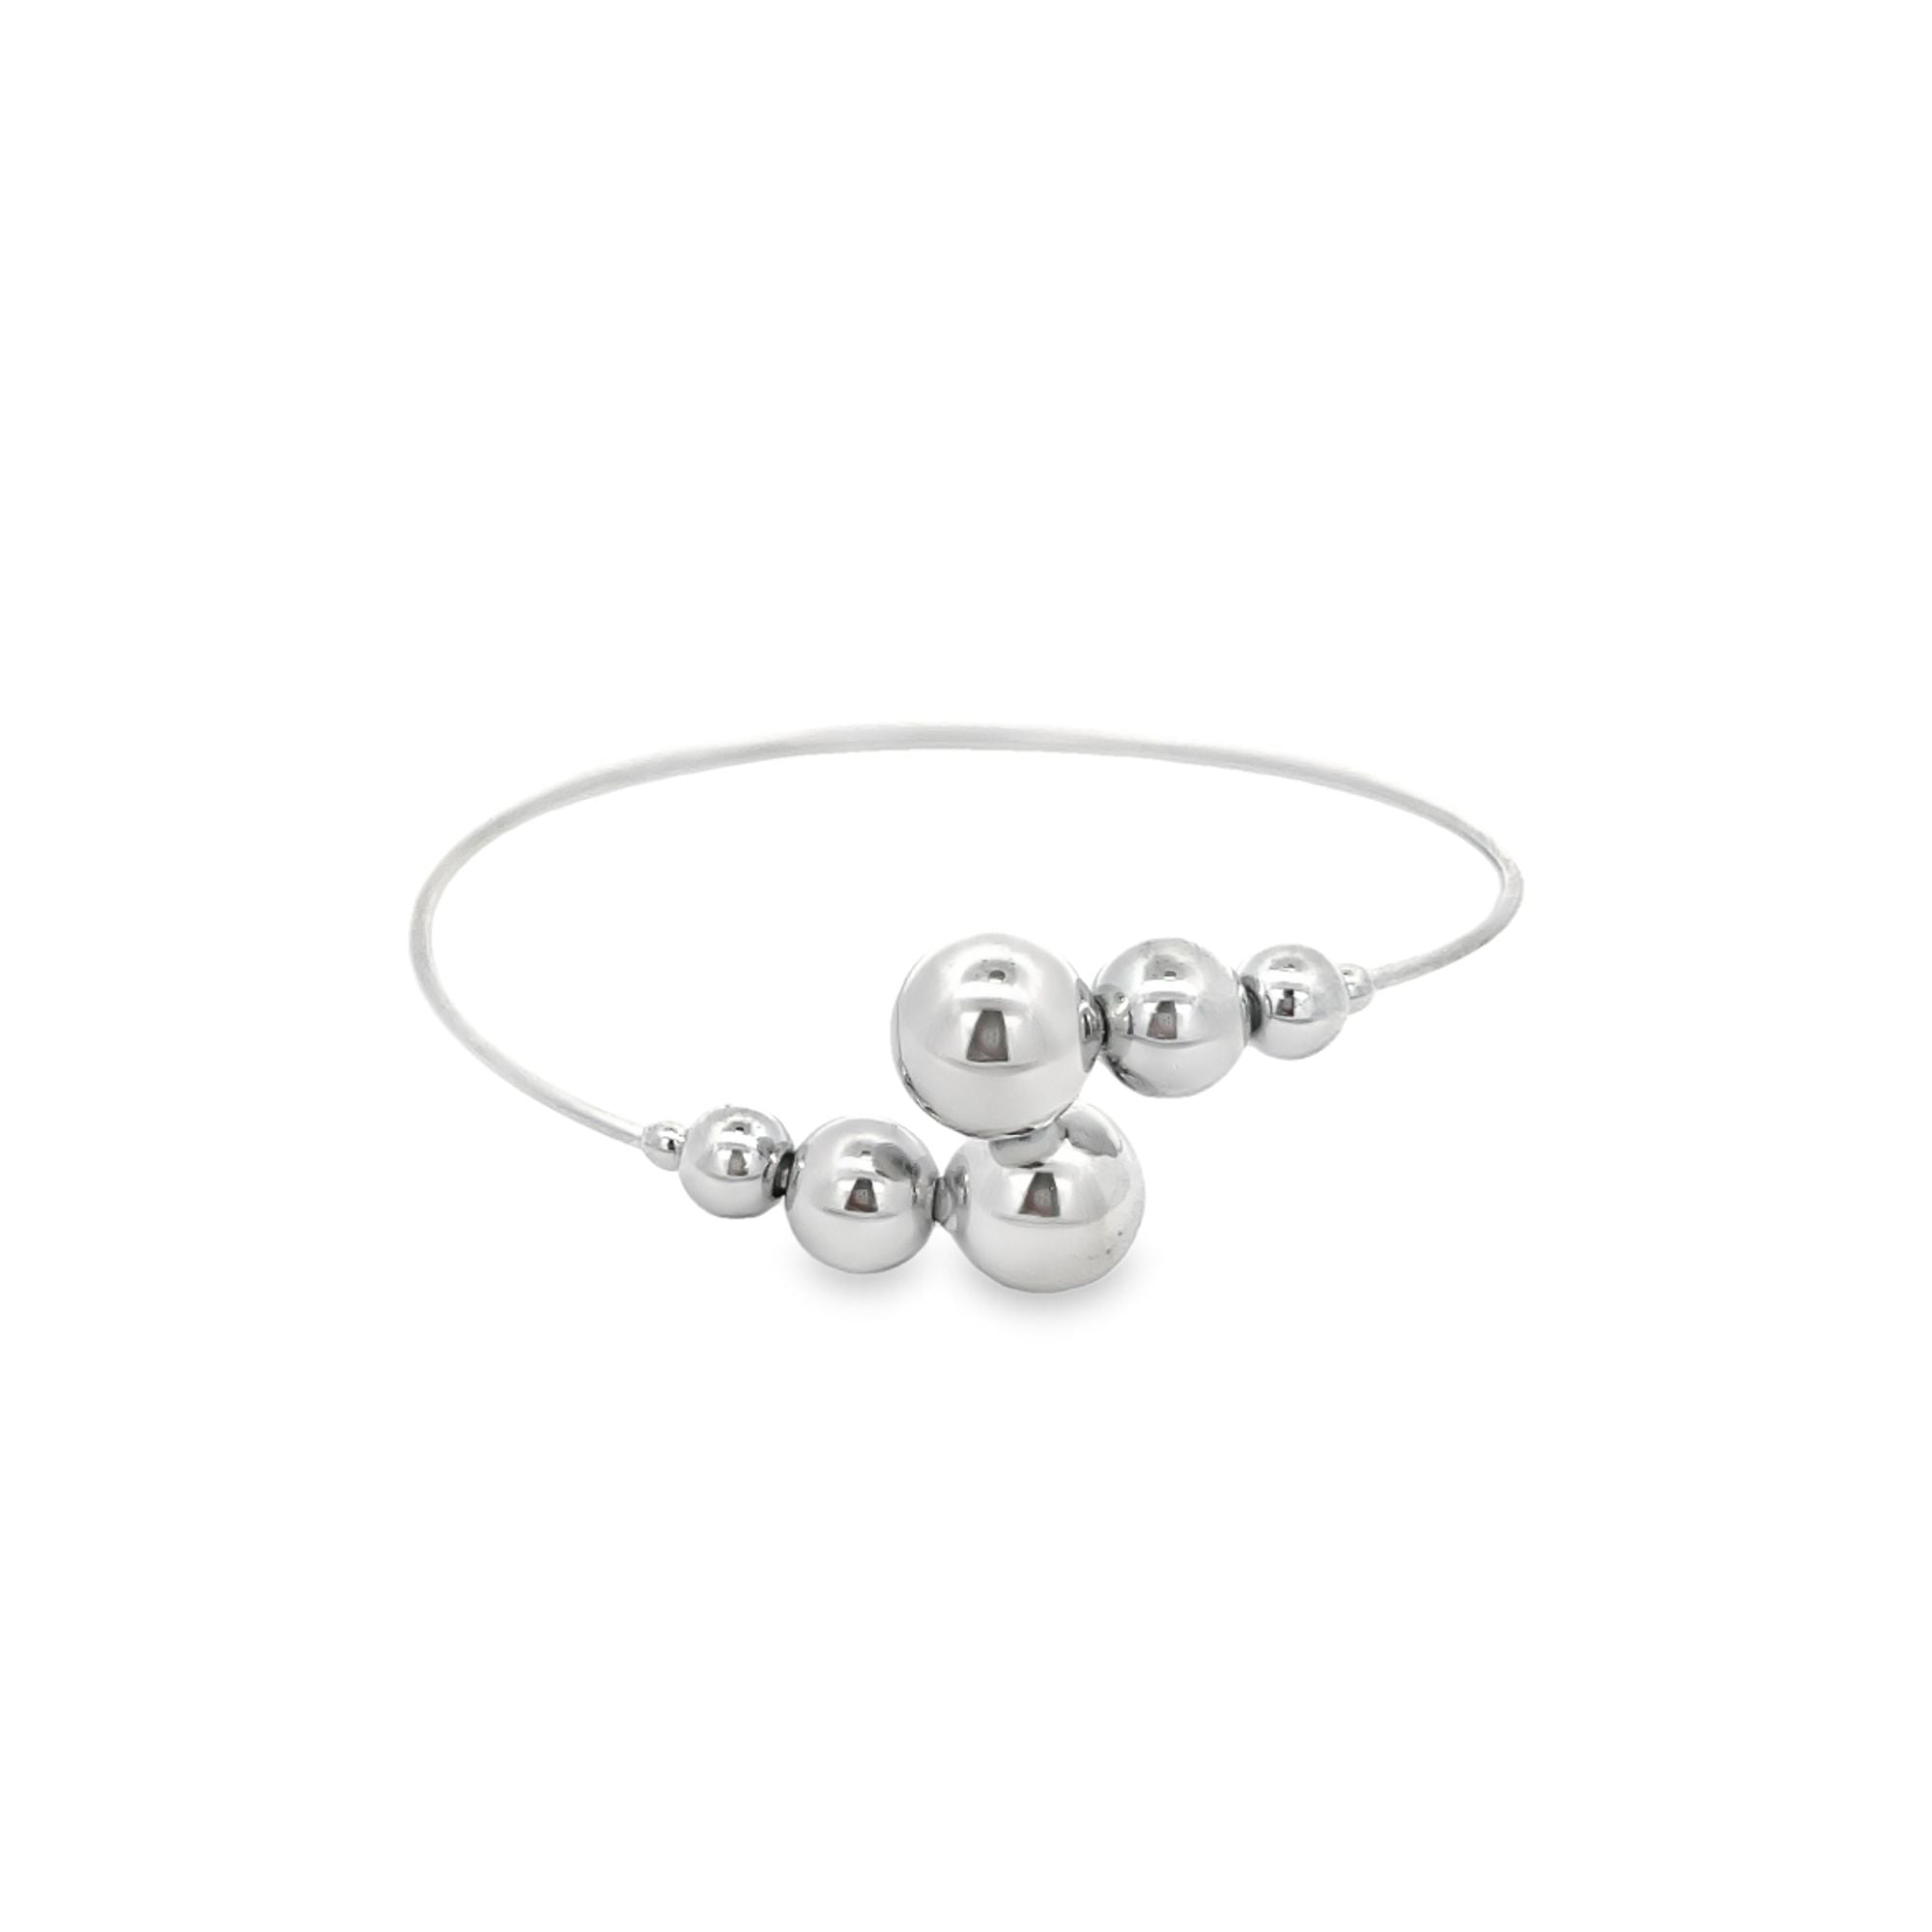 Wrist Cuff Bangle With Gold/Pearls Ball Beads (B2)